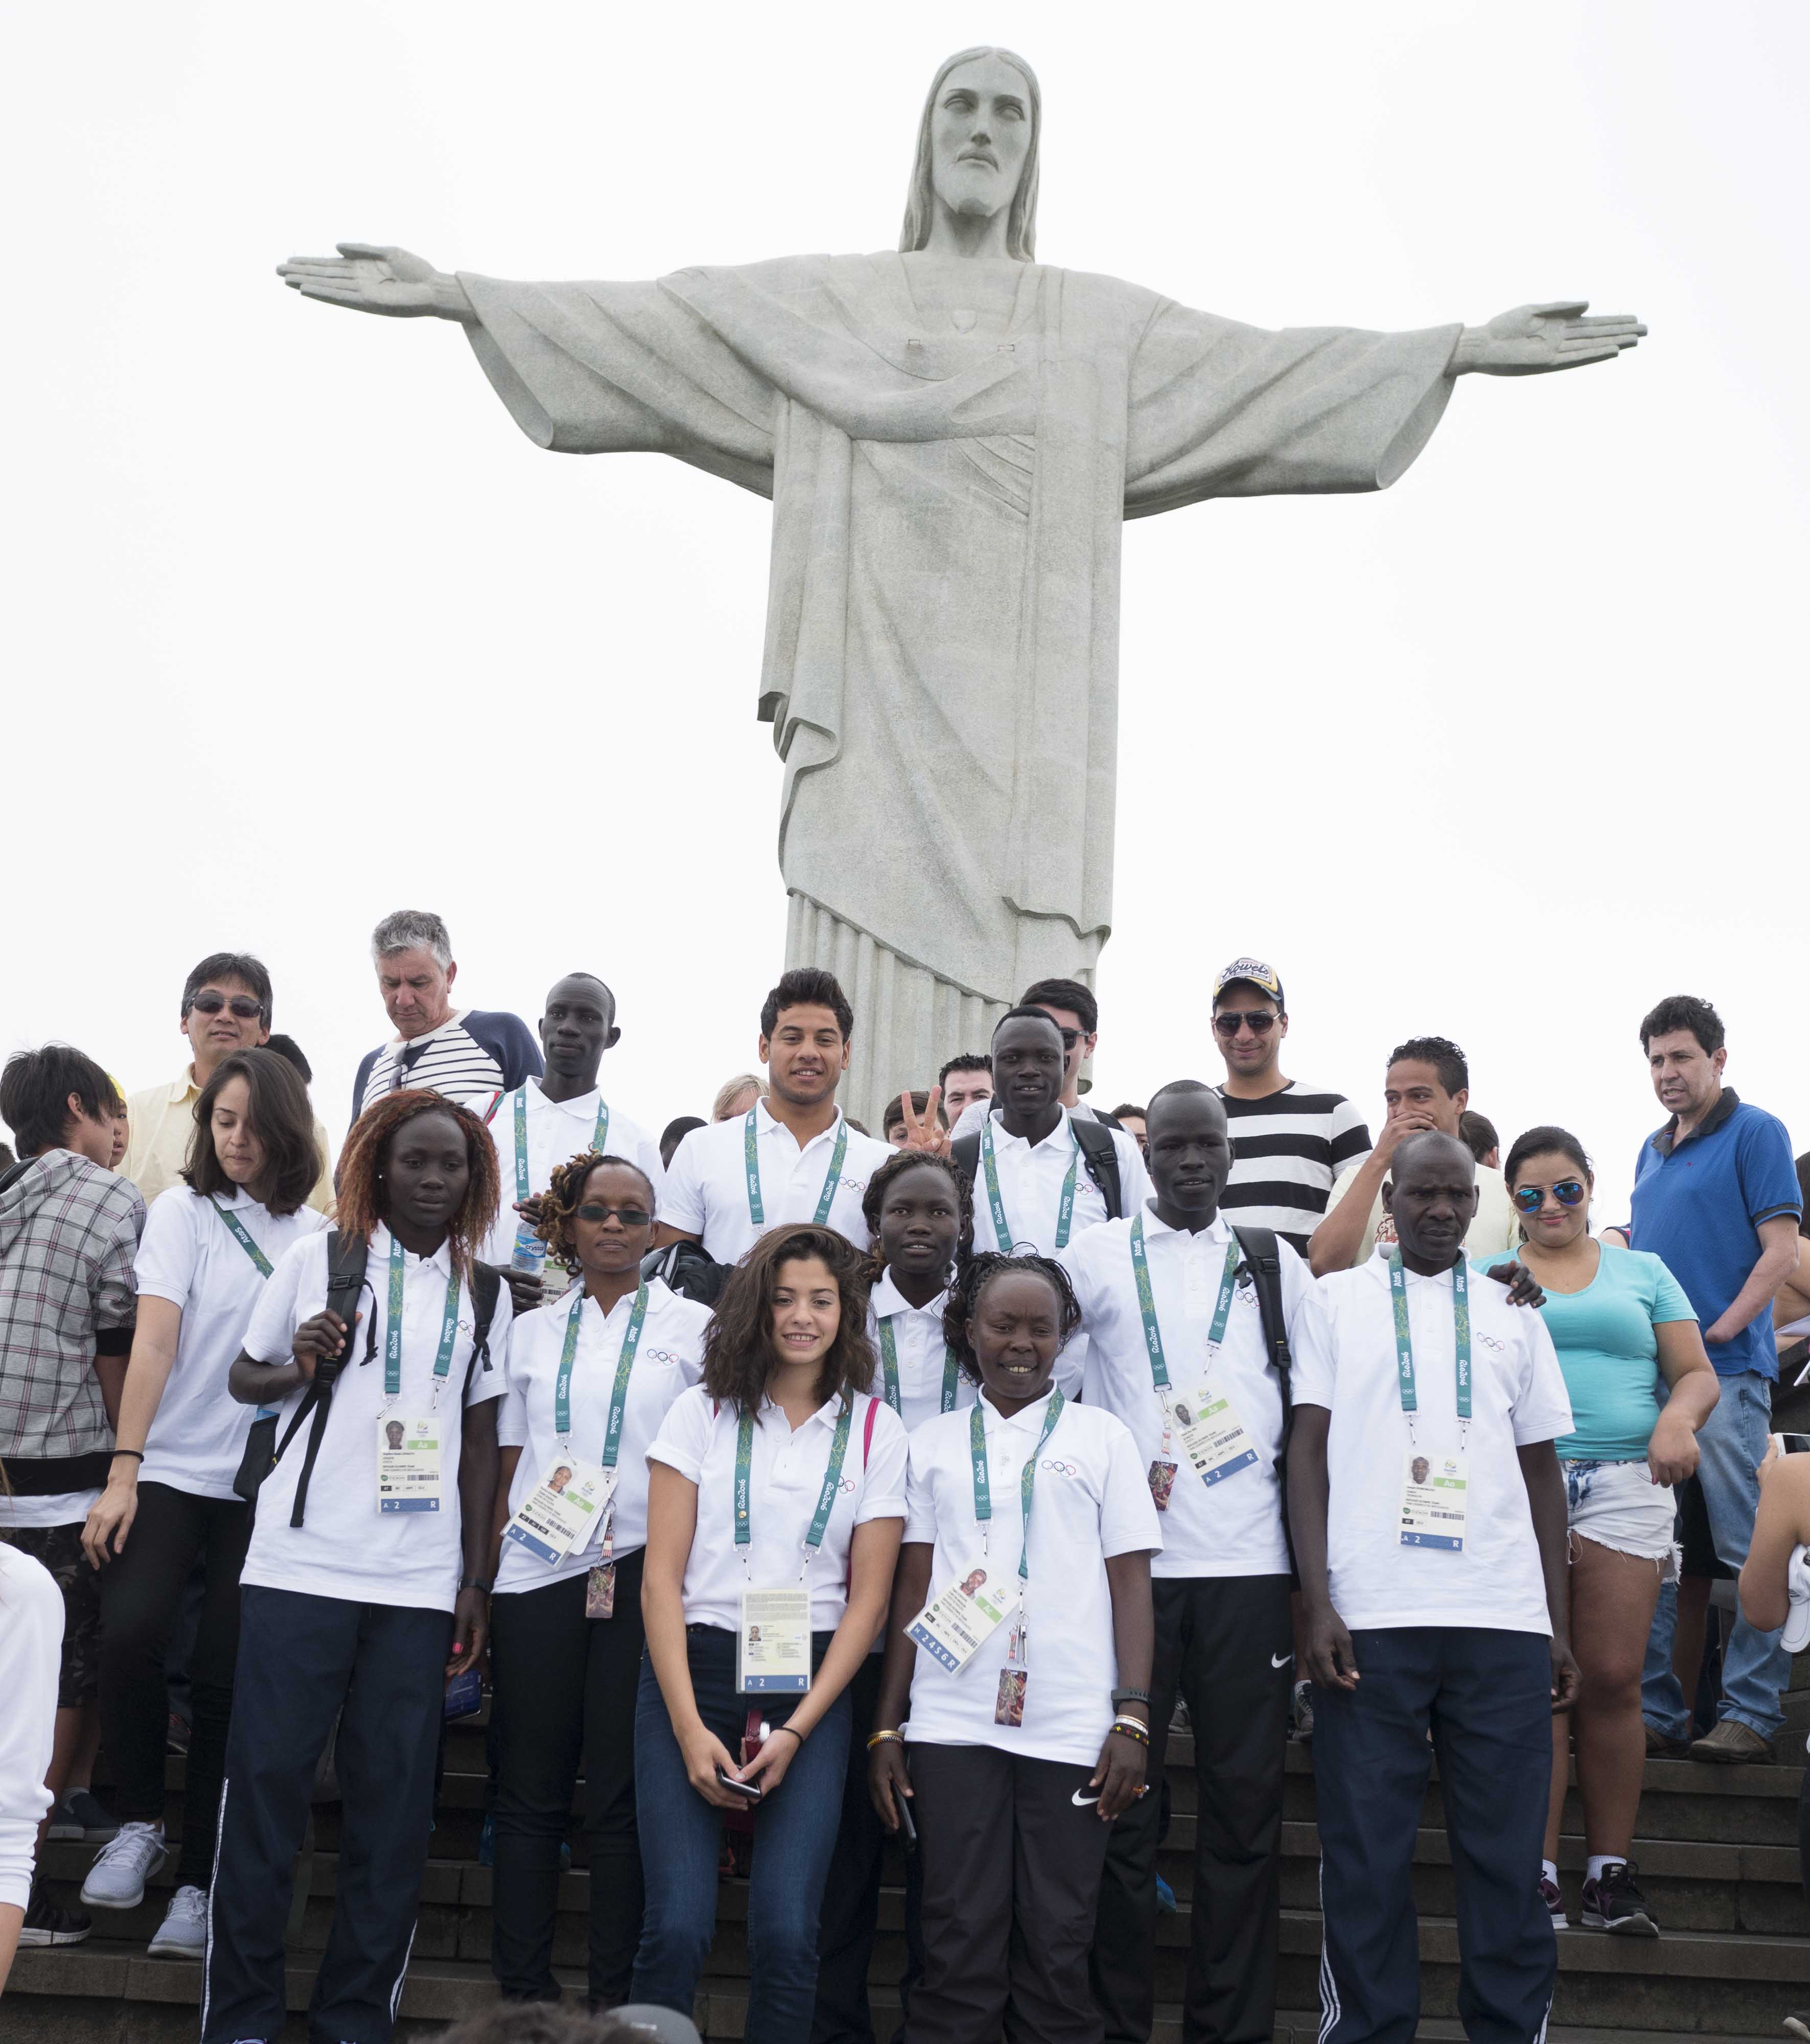 Rio games shine light on refugee crisis